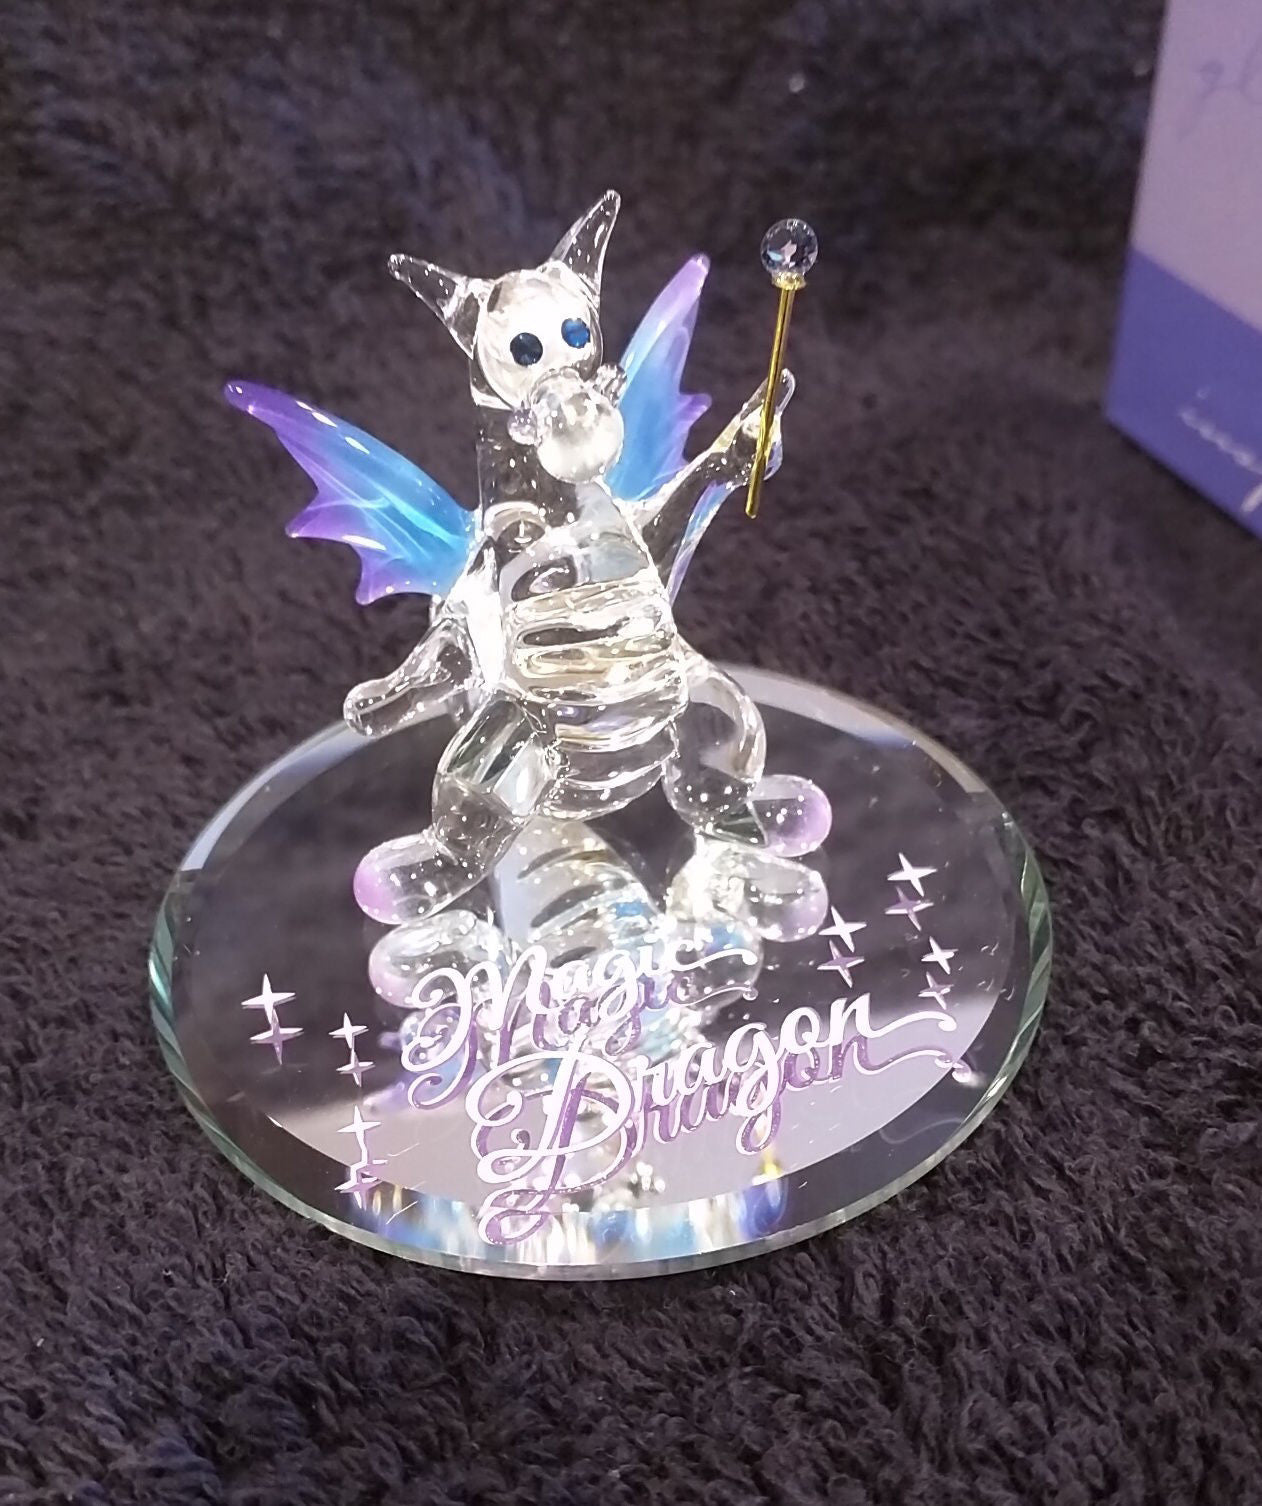 Glass Baron "Magic Dragon" Figurine